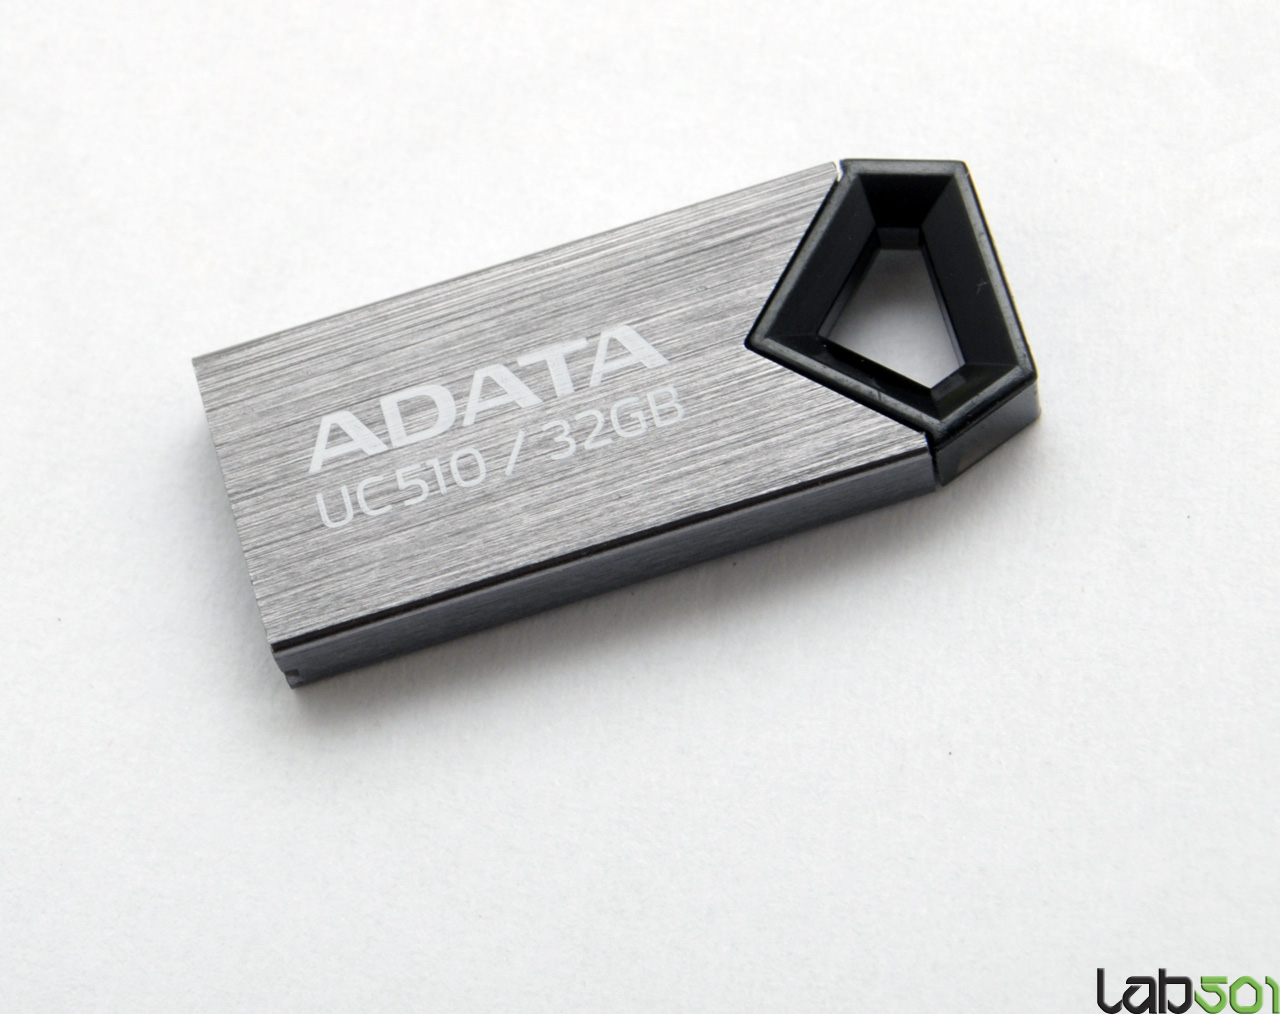 USB  32GB A-DATA UC510 TITANIUM